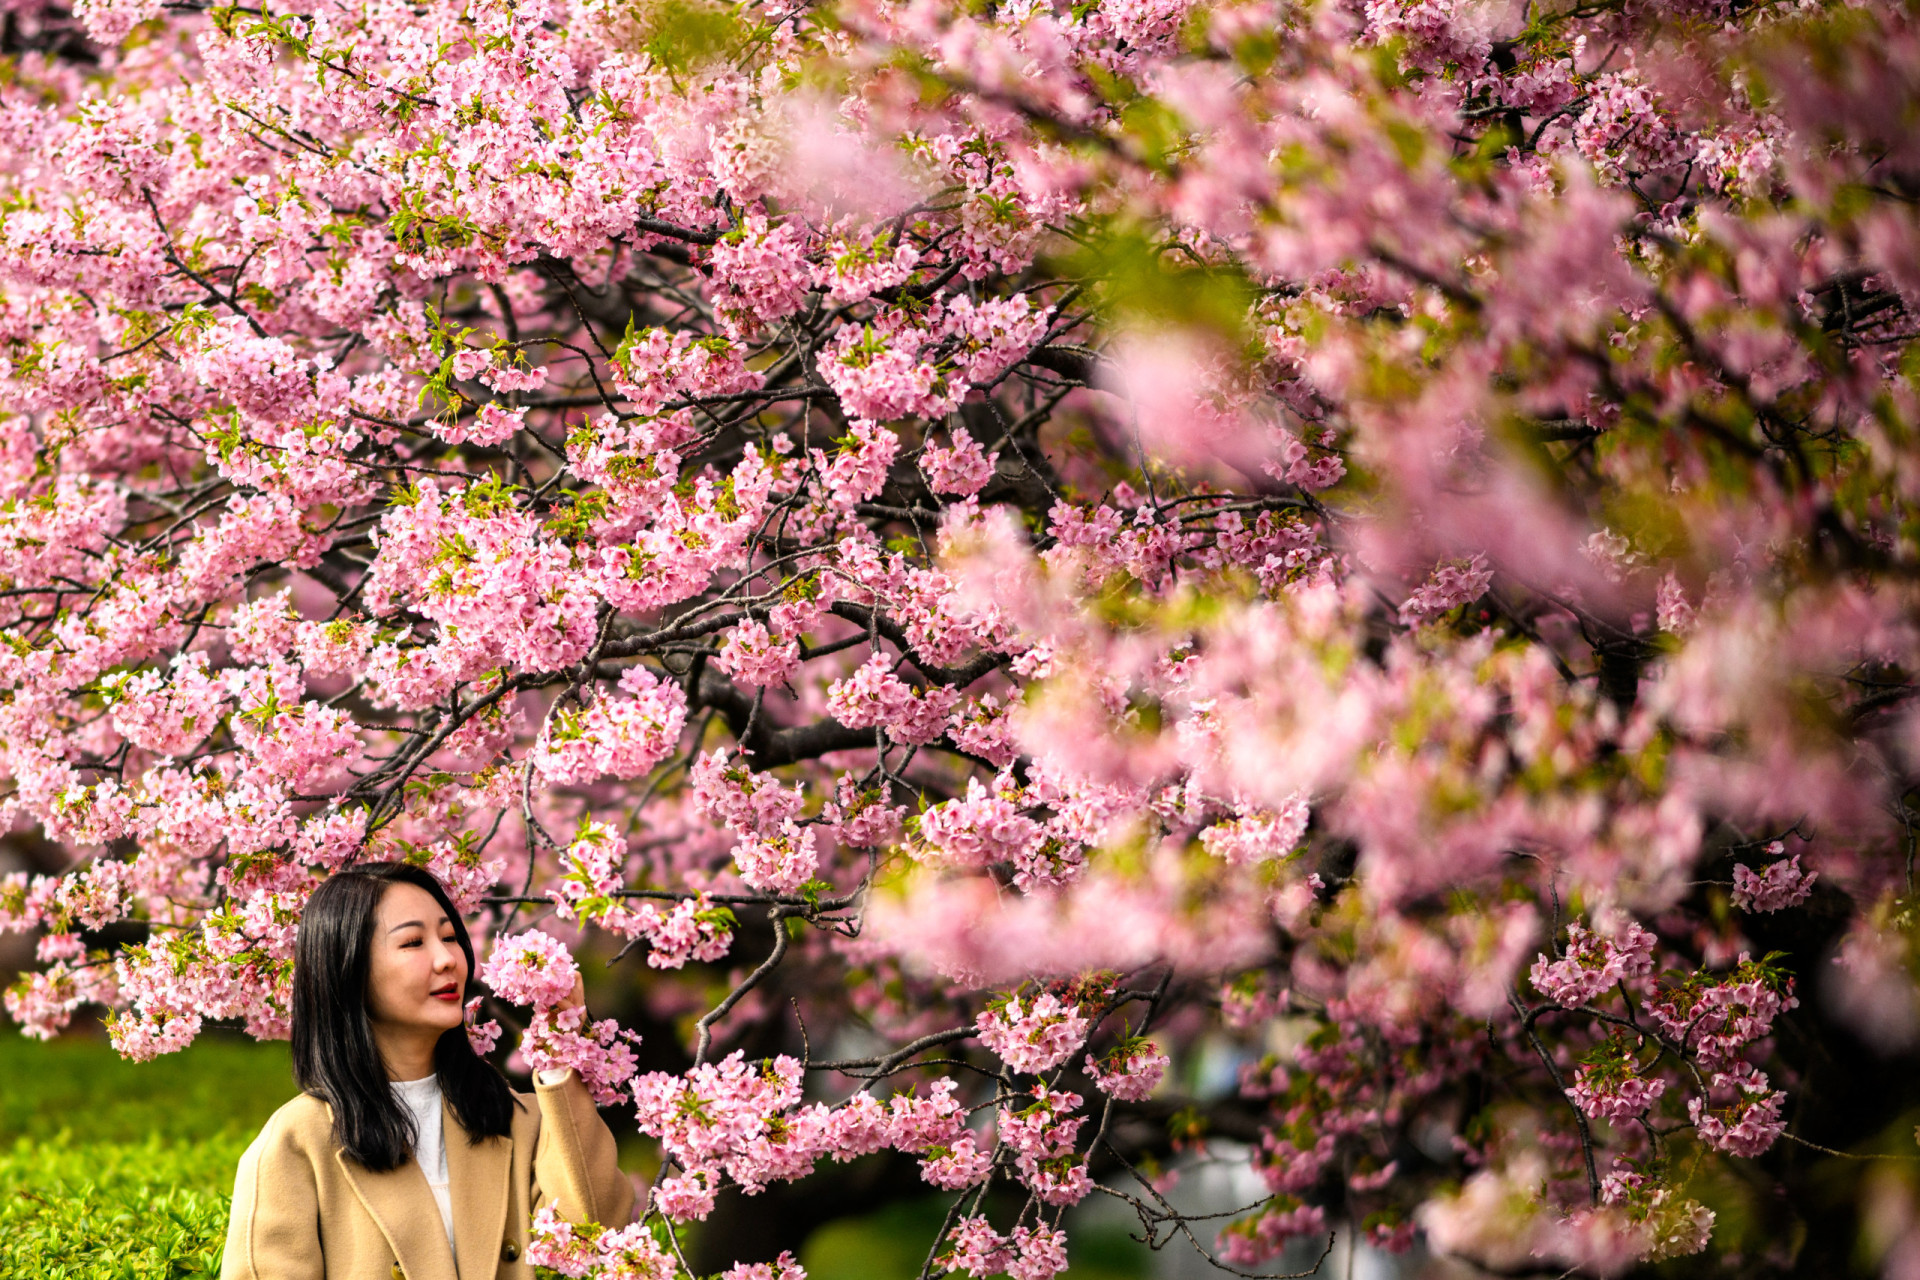 Tips and trivia to enjoy the Japanese cherry blossom season